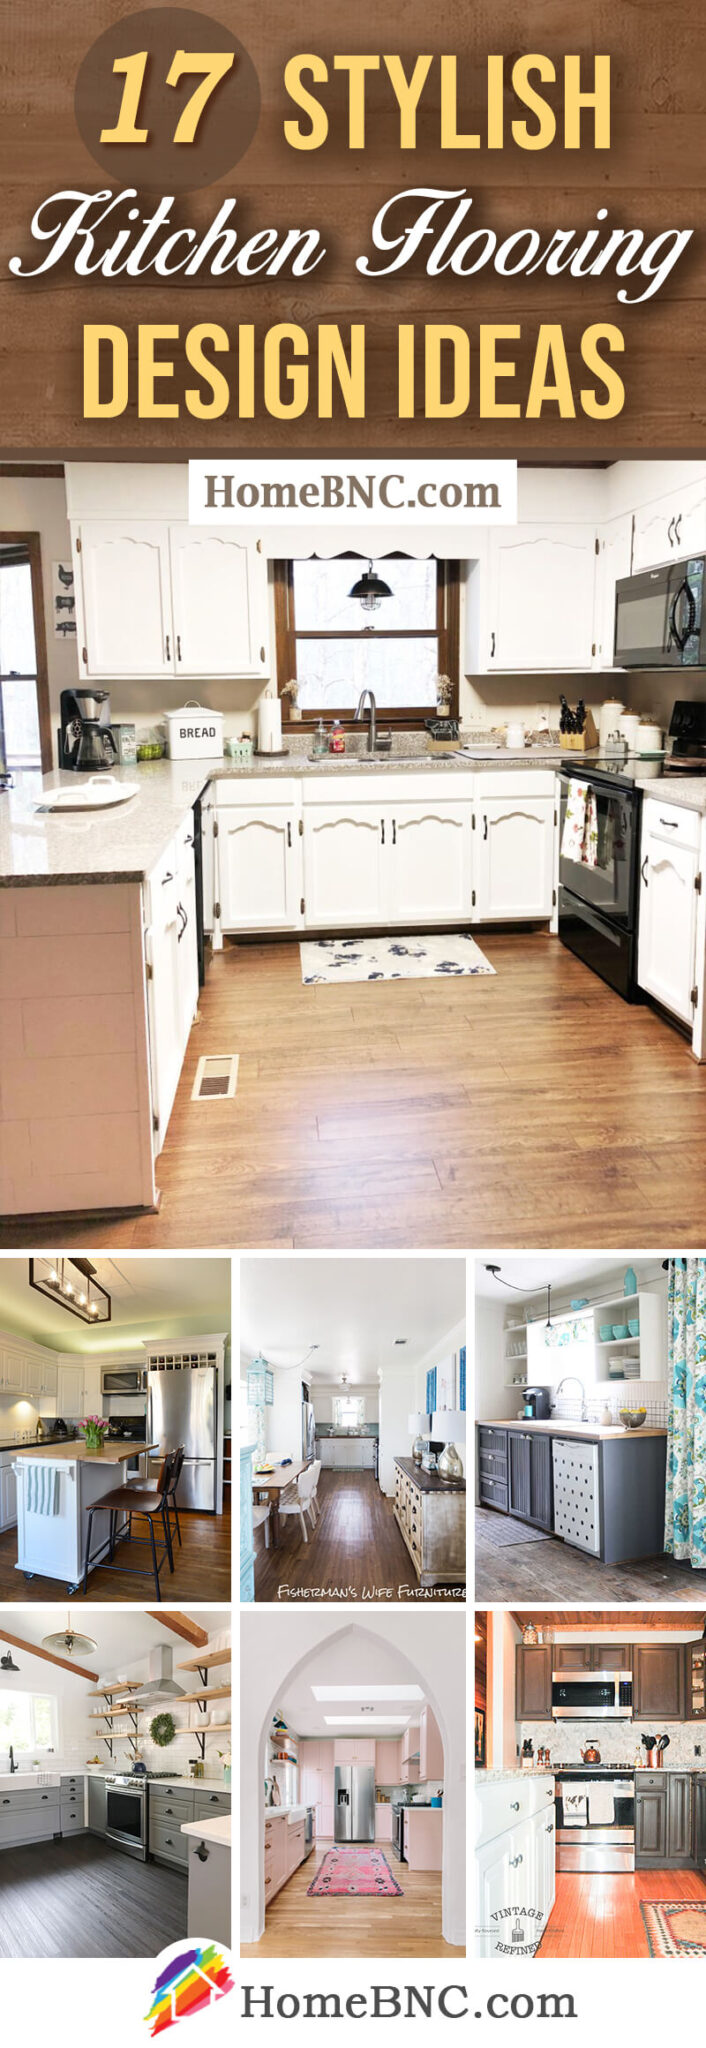 Best Kitchen Flooring Design Ideas Pinterest Share Homebnc 706x2048 